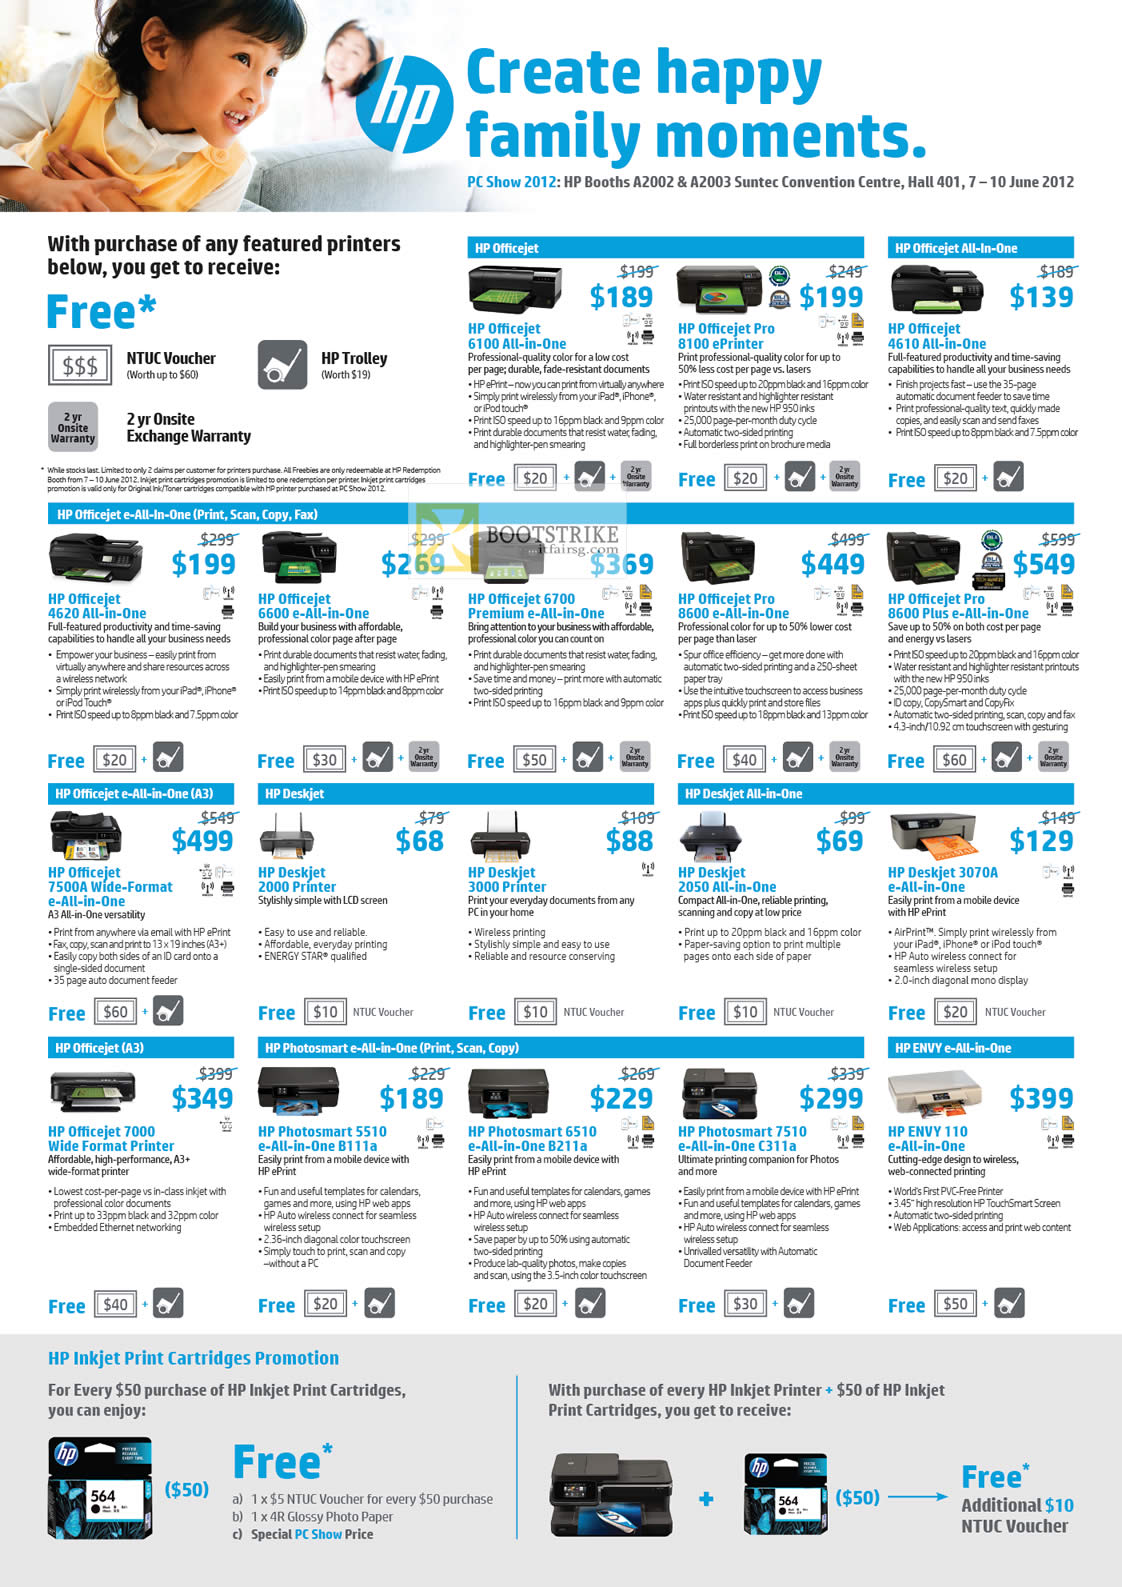 PC SHOW 2012 price list image brochure of HP Printers Inkjet Officejet 6100, Pro 8100, 4610, Pro 8600 Plus, Pro 8600, 6700 Premium, 6600, 4620, 7500A, Deskjet 2000, 3070A, ENVY 110, 7510 C311a, 6510 B211a